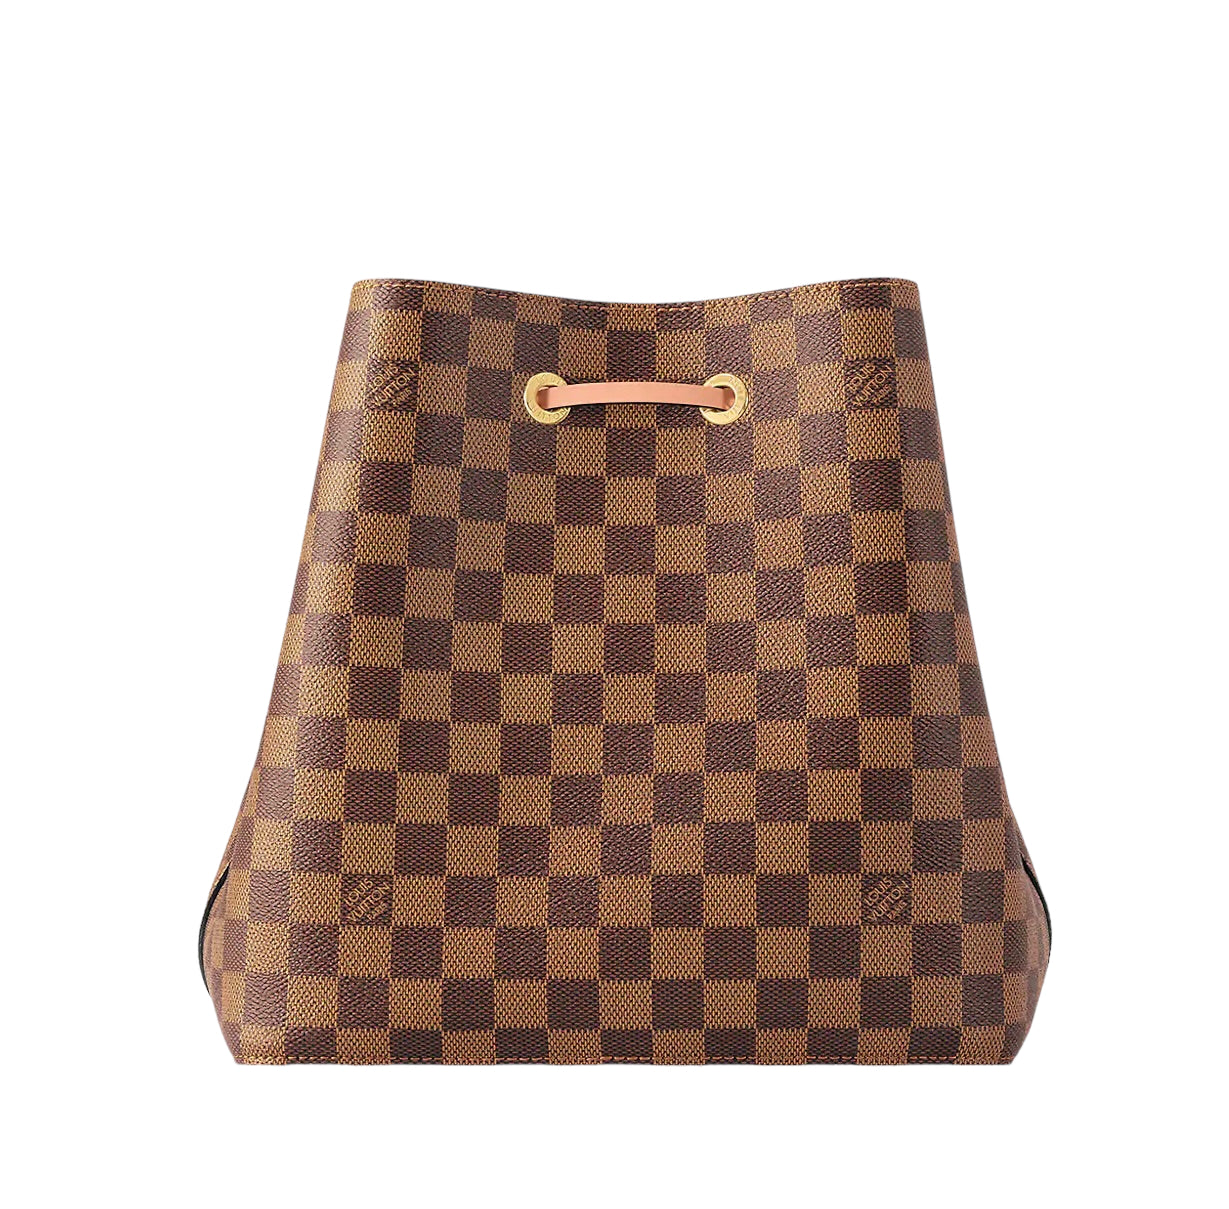 Louis Vuitton torba, nova